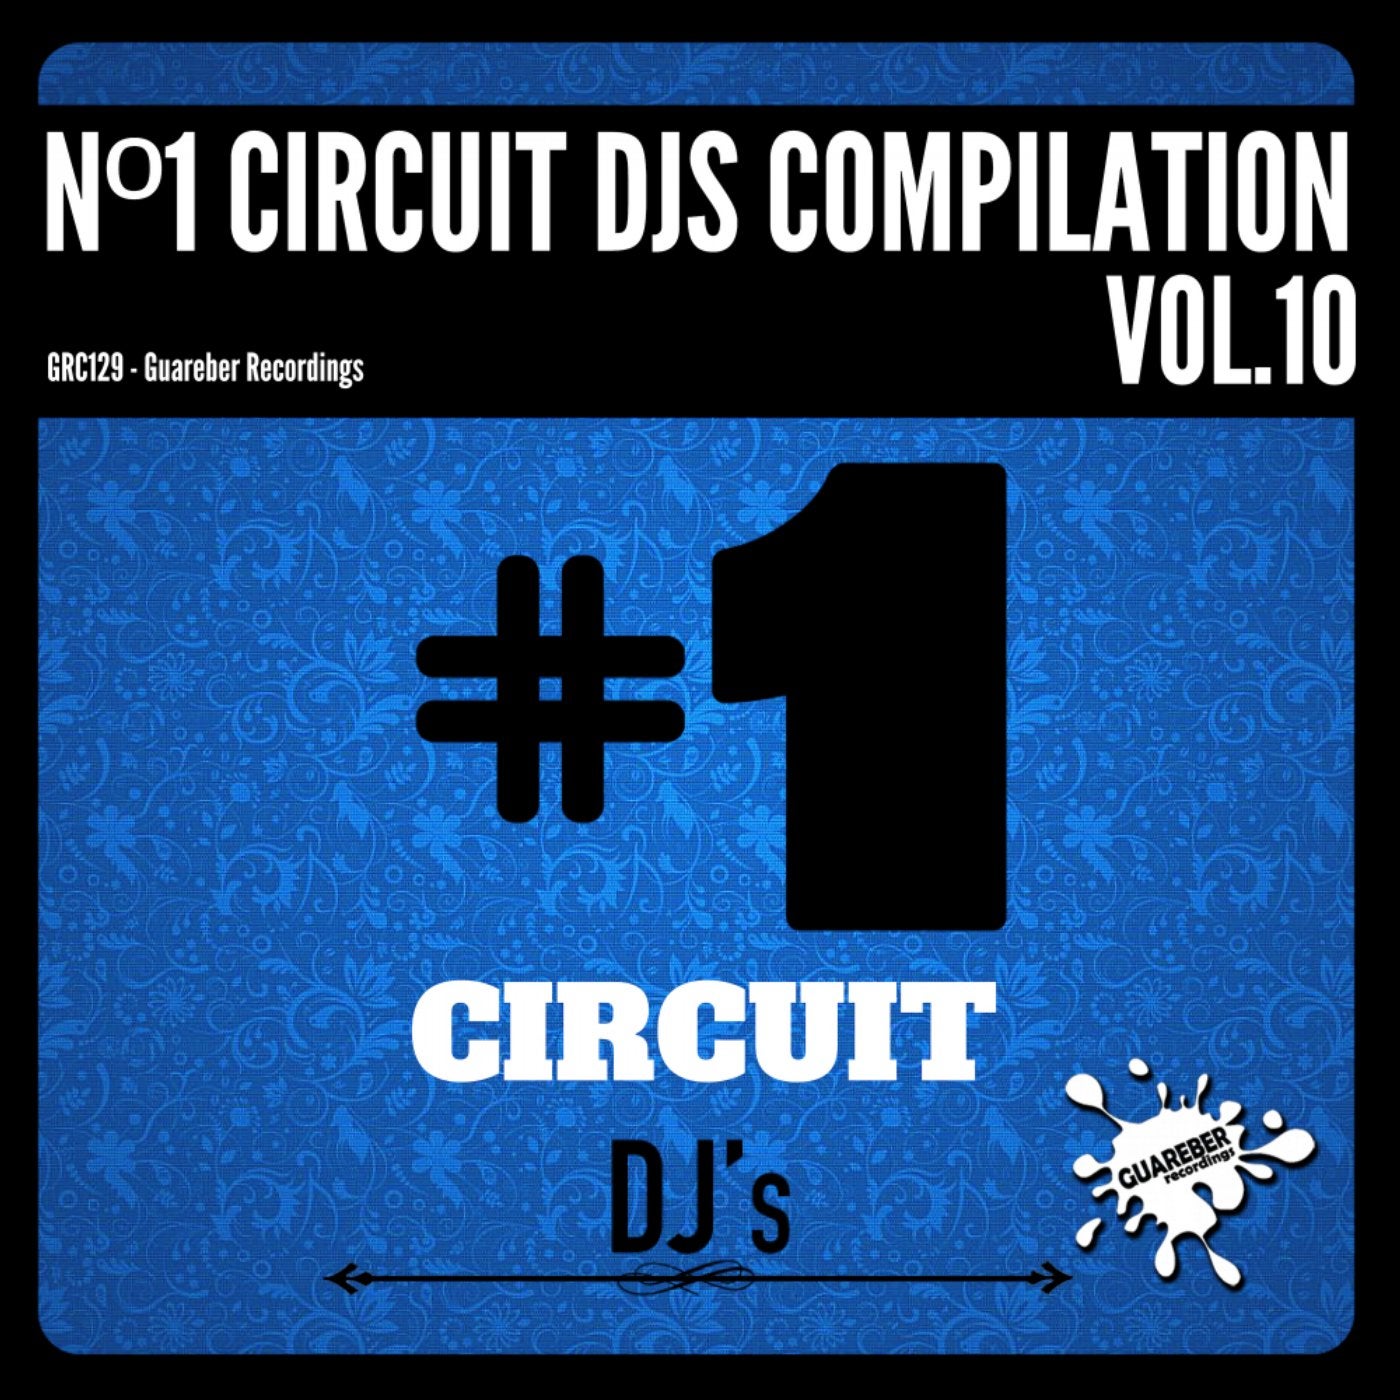 Nº1 Circuit Djs Compilation, Vol. 10